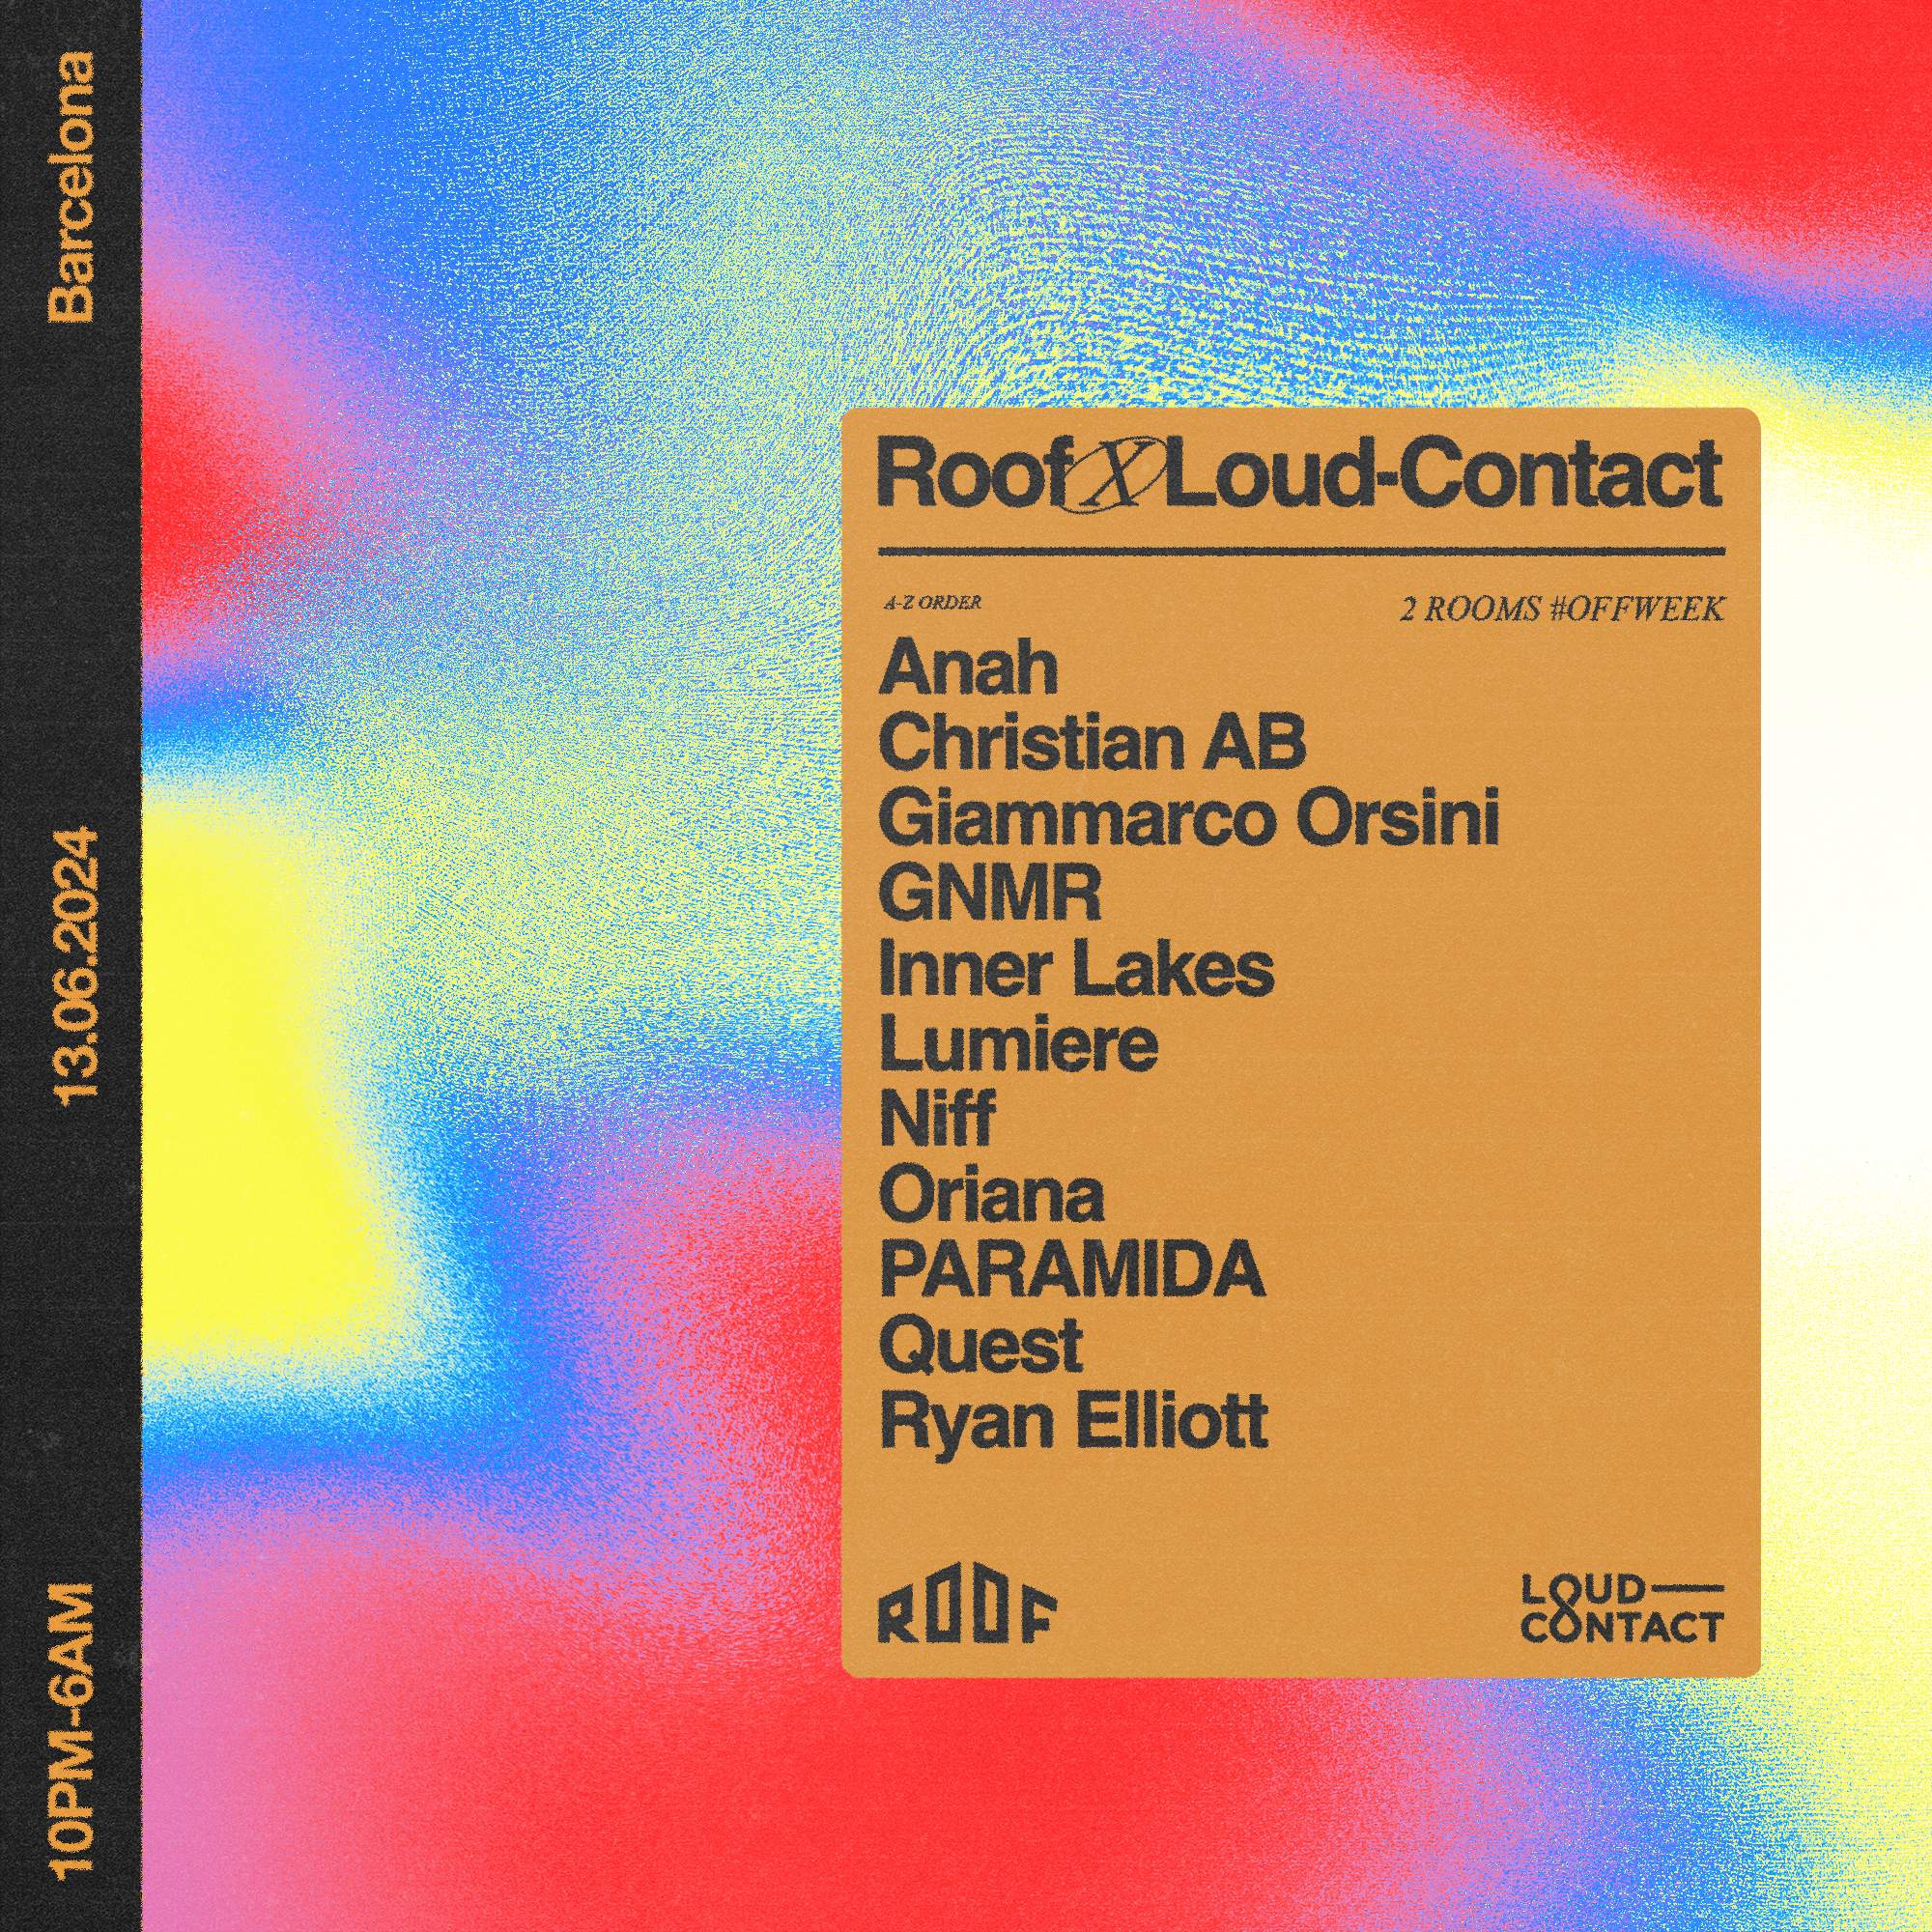 Roof x Loud-Contact - Off Week - Página trasera